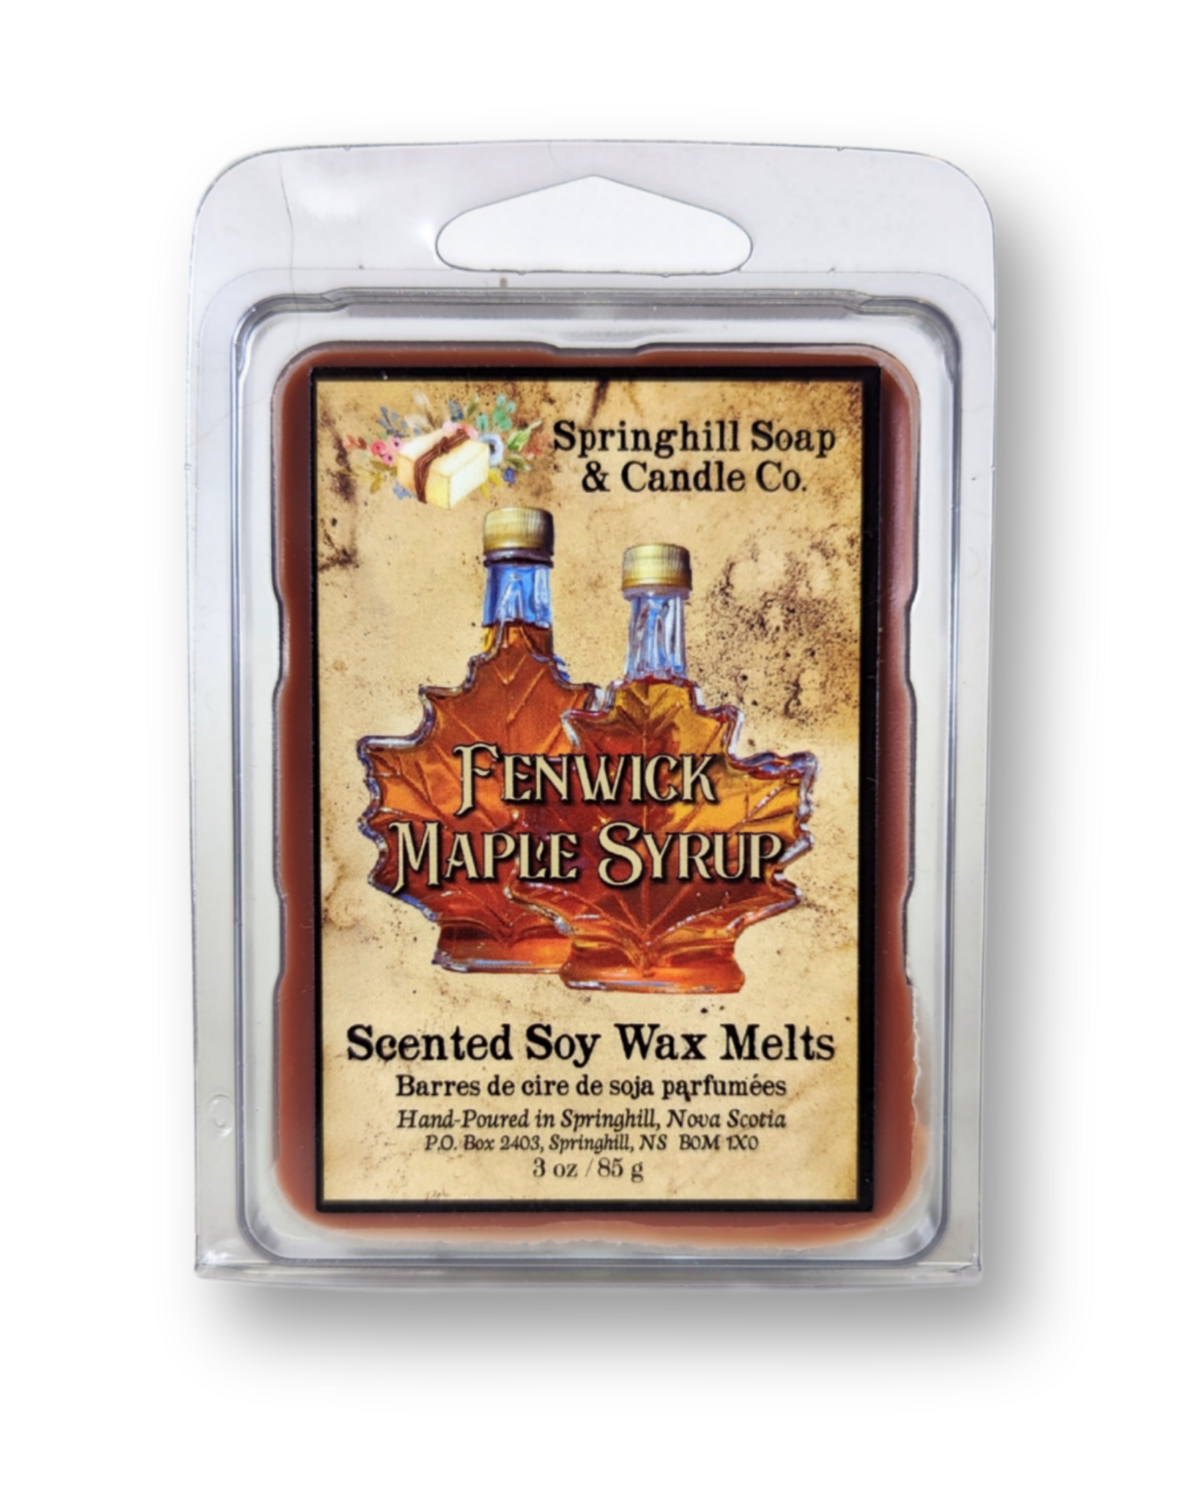 Fenwick Maple Syrup 3oz Soy Wax Melts